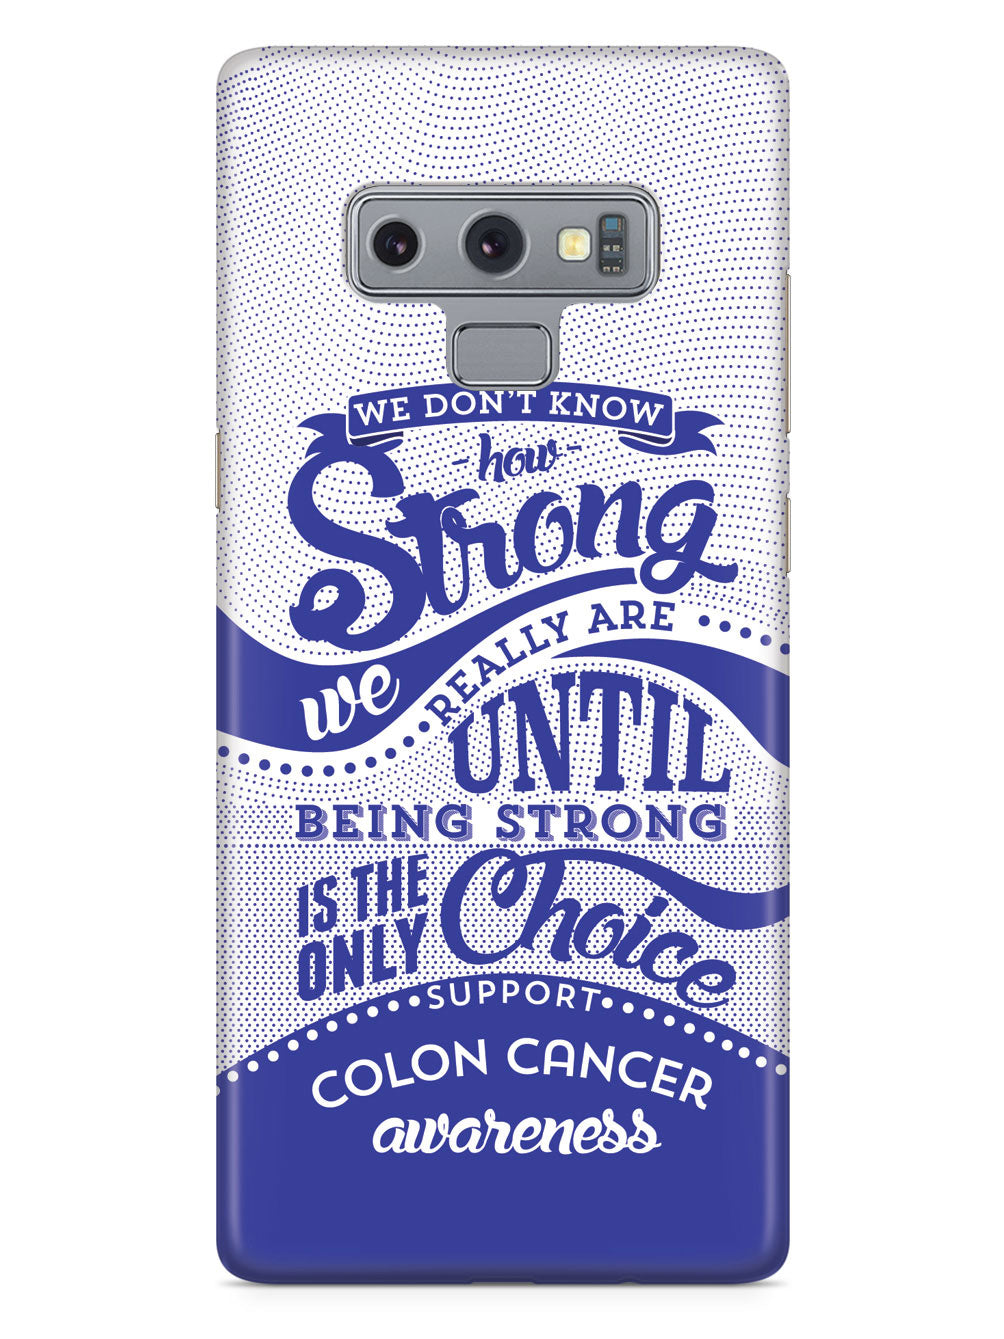 Colon Cancer - How Strong Case